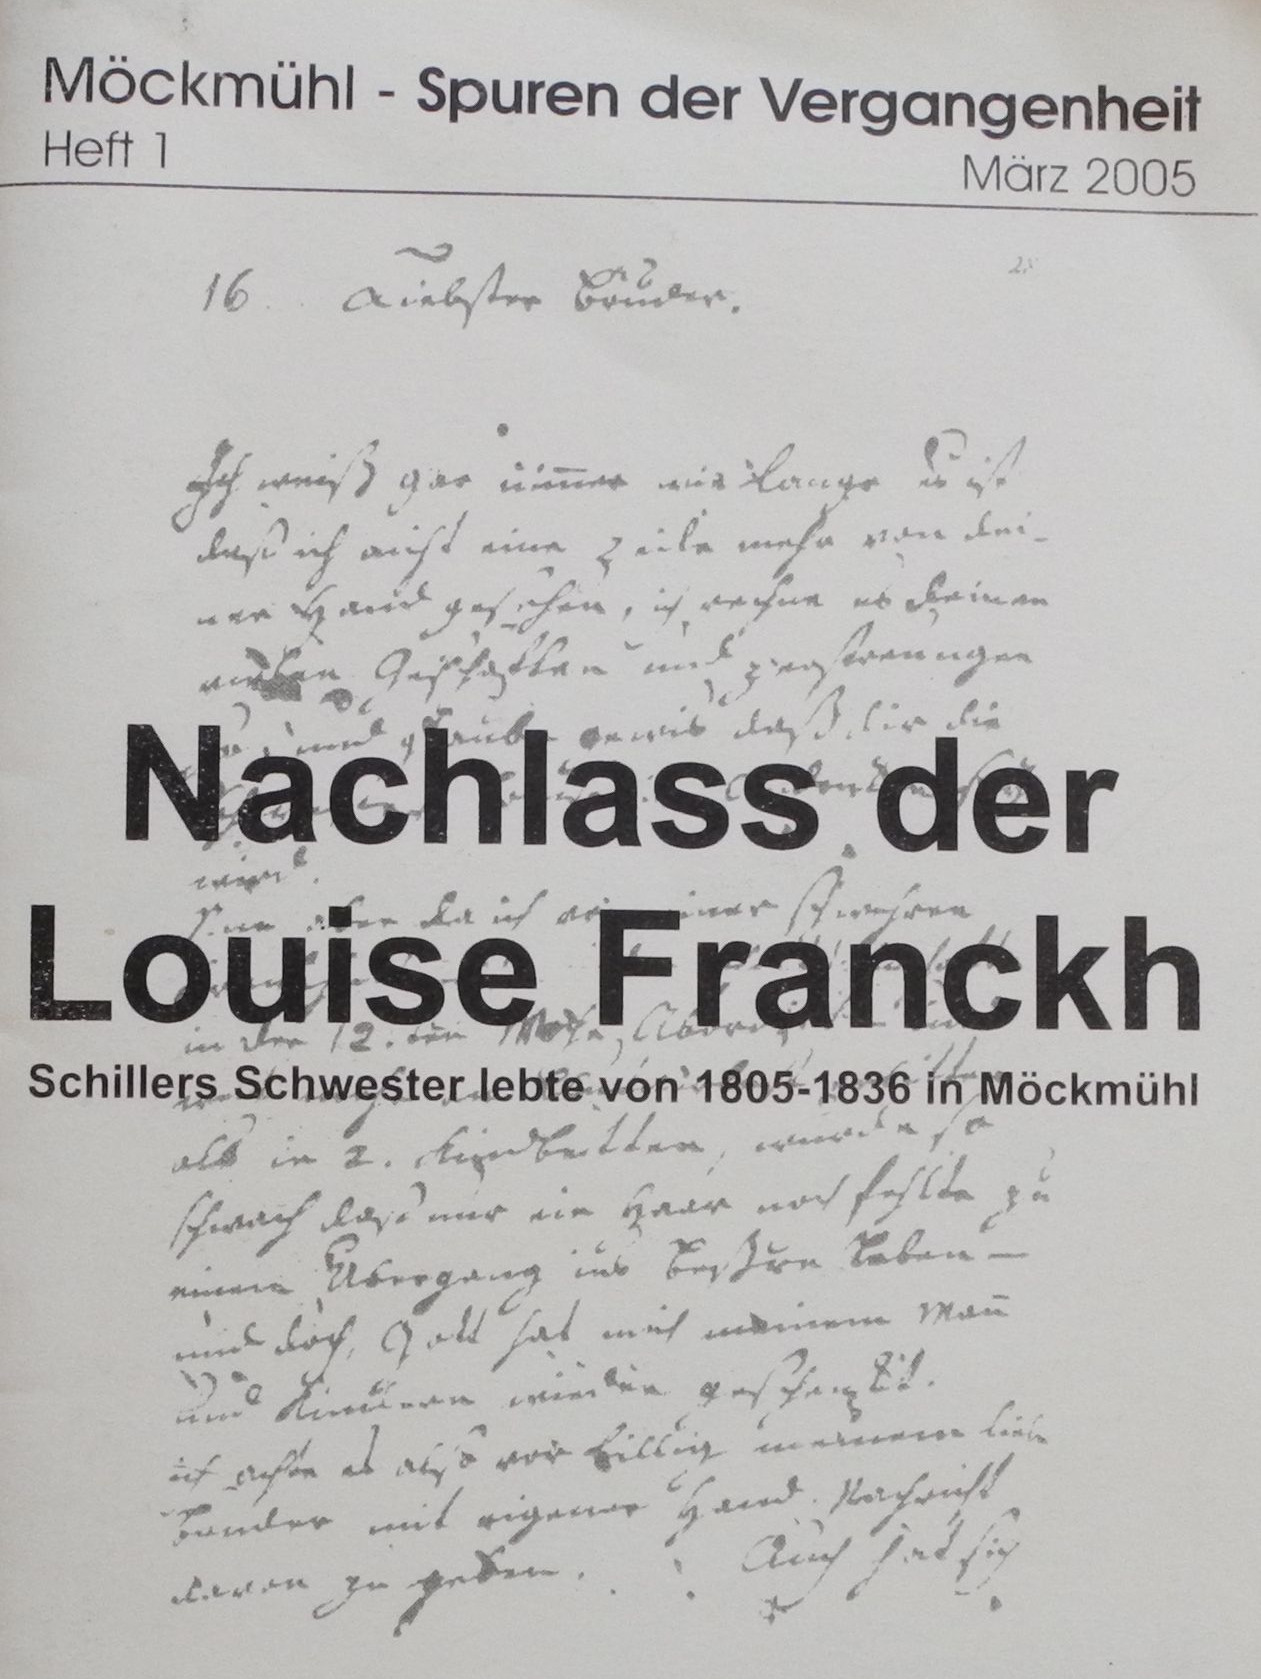 Möckmühl - Spuren der Vergangenheit, Heft 1 Nachlass der Louise Franckh